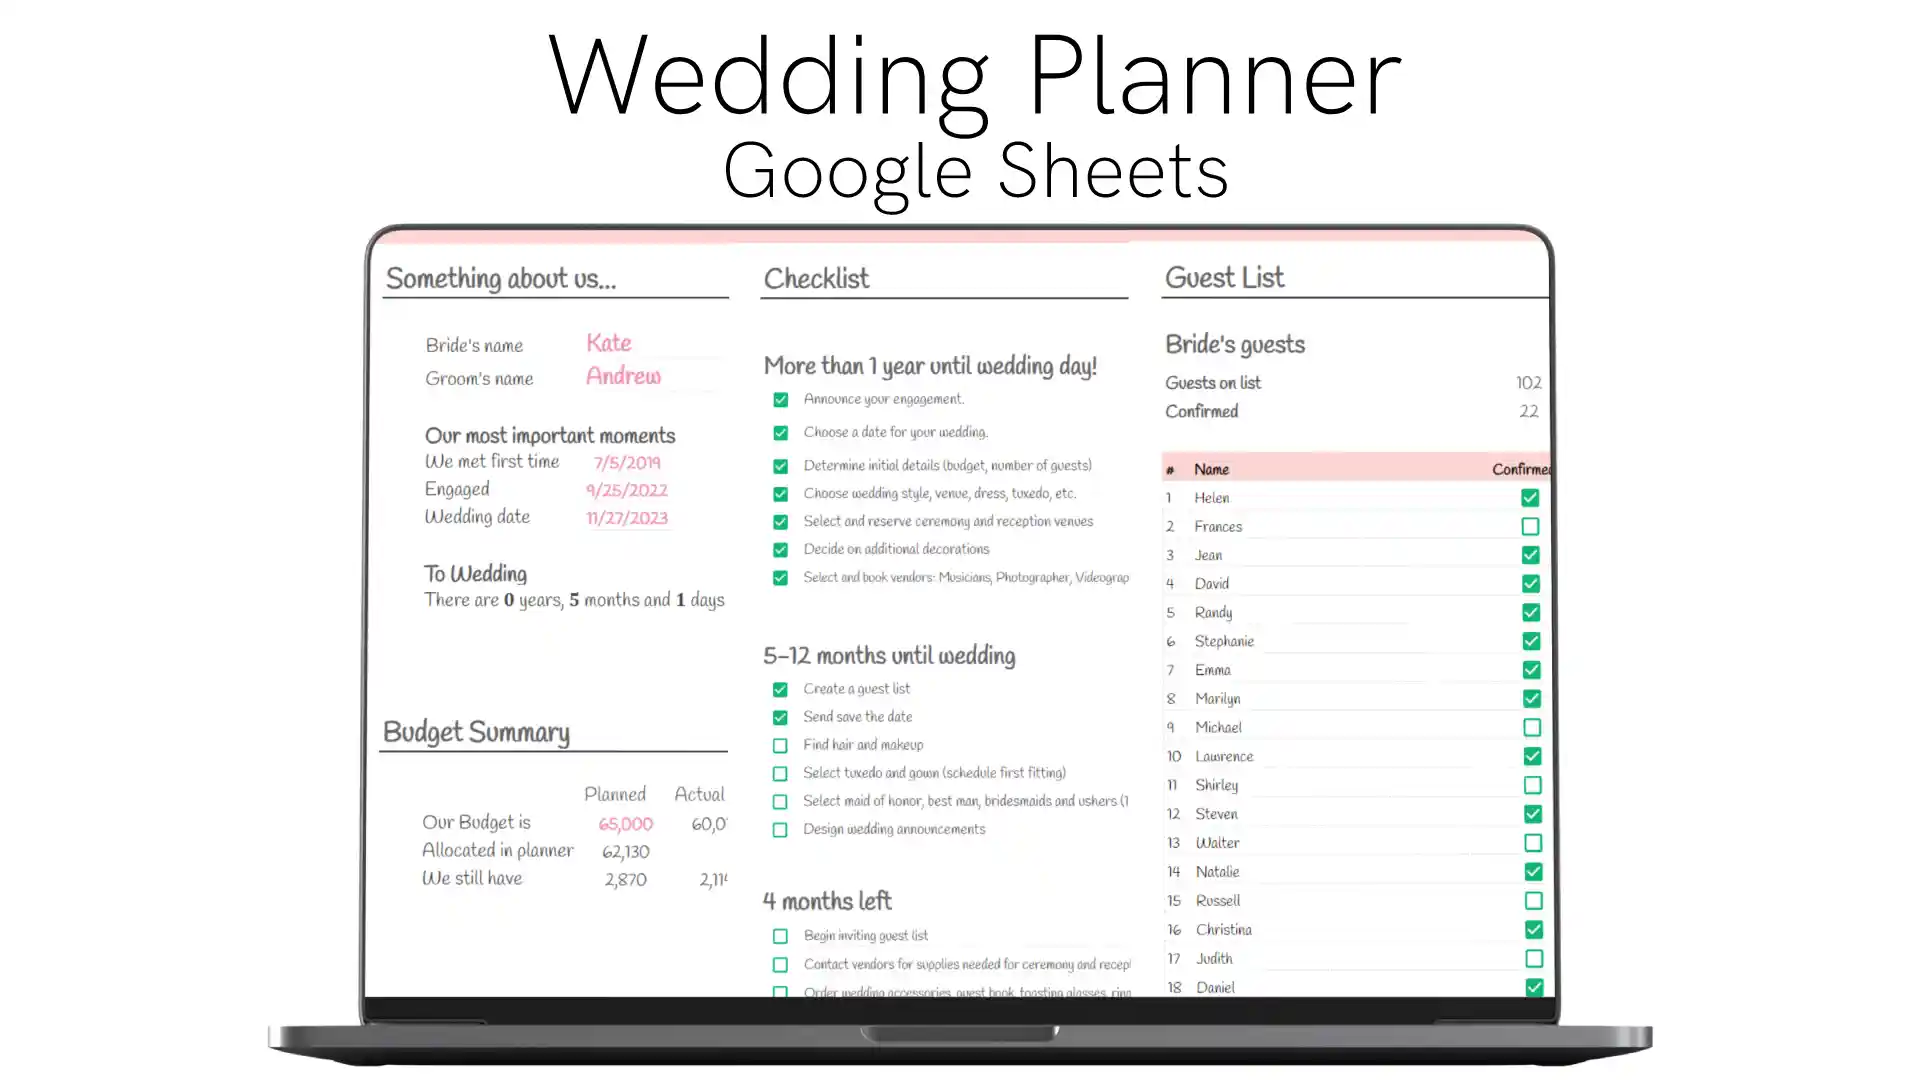 Wedding Registry Checklist Wedding Planning Printable Instant